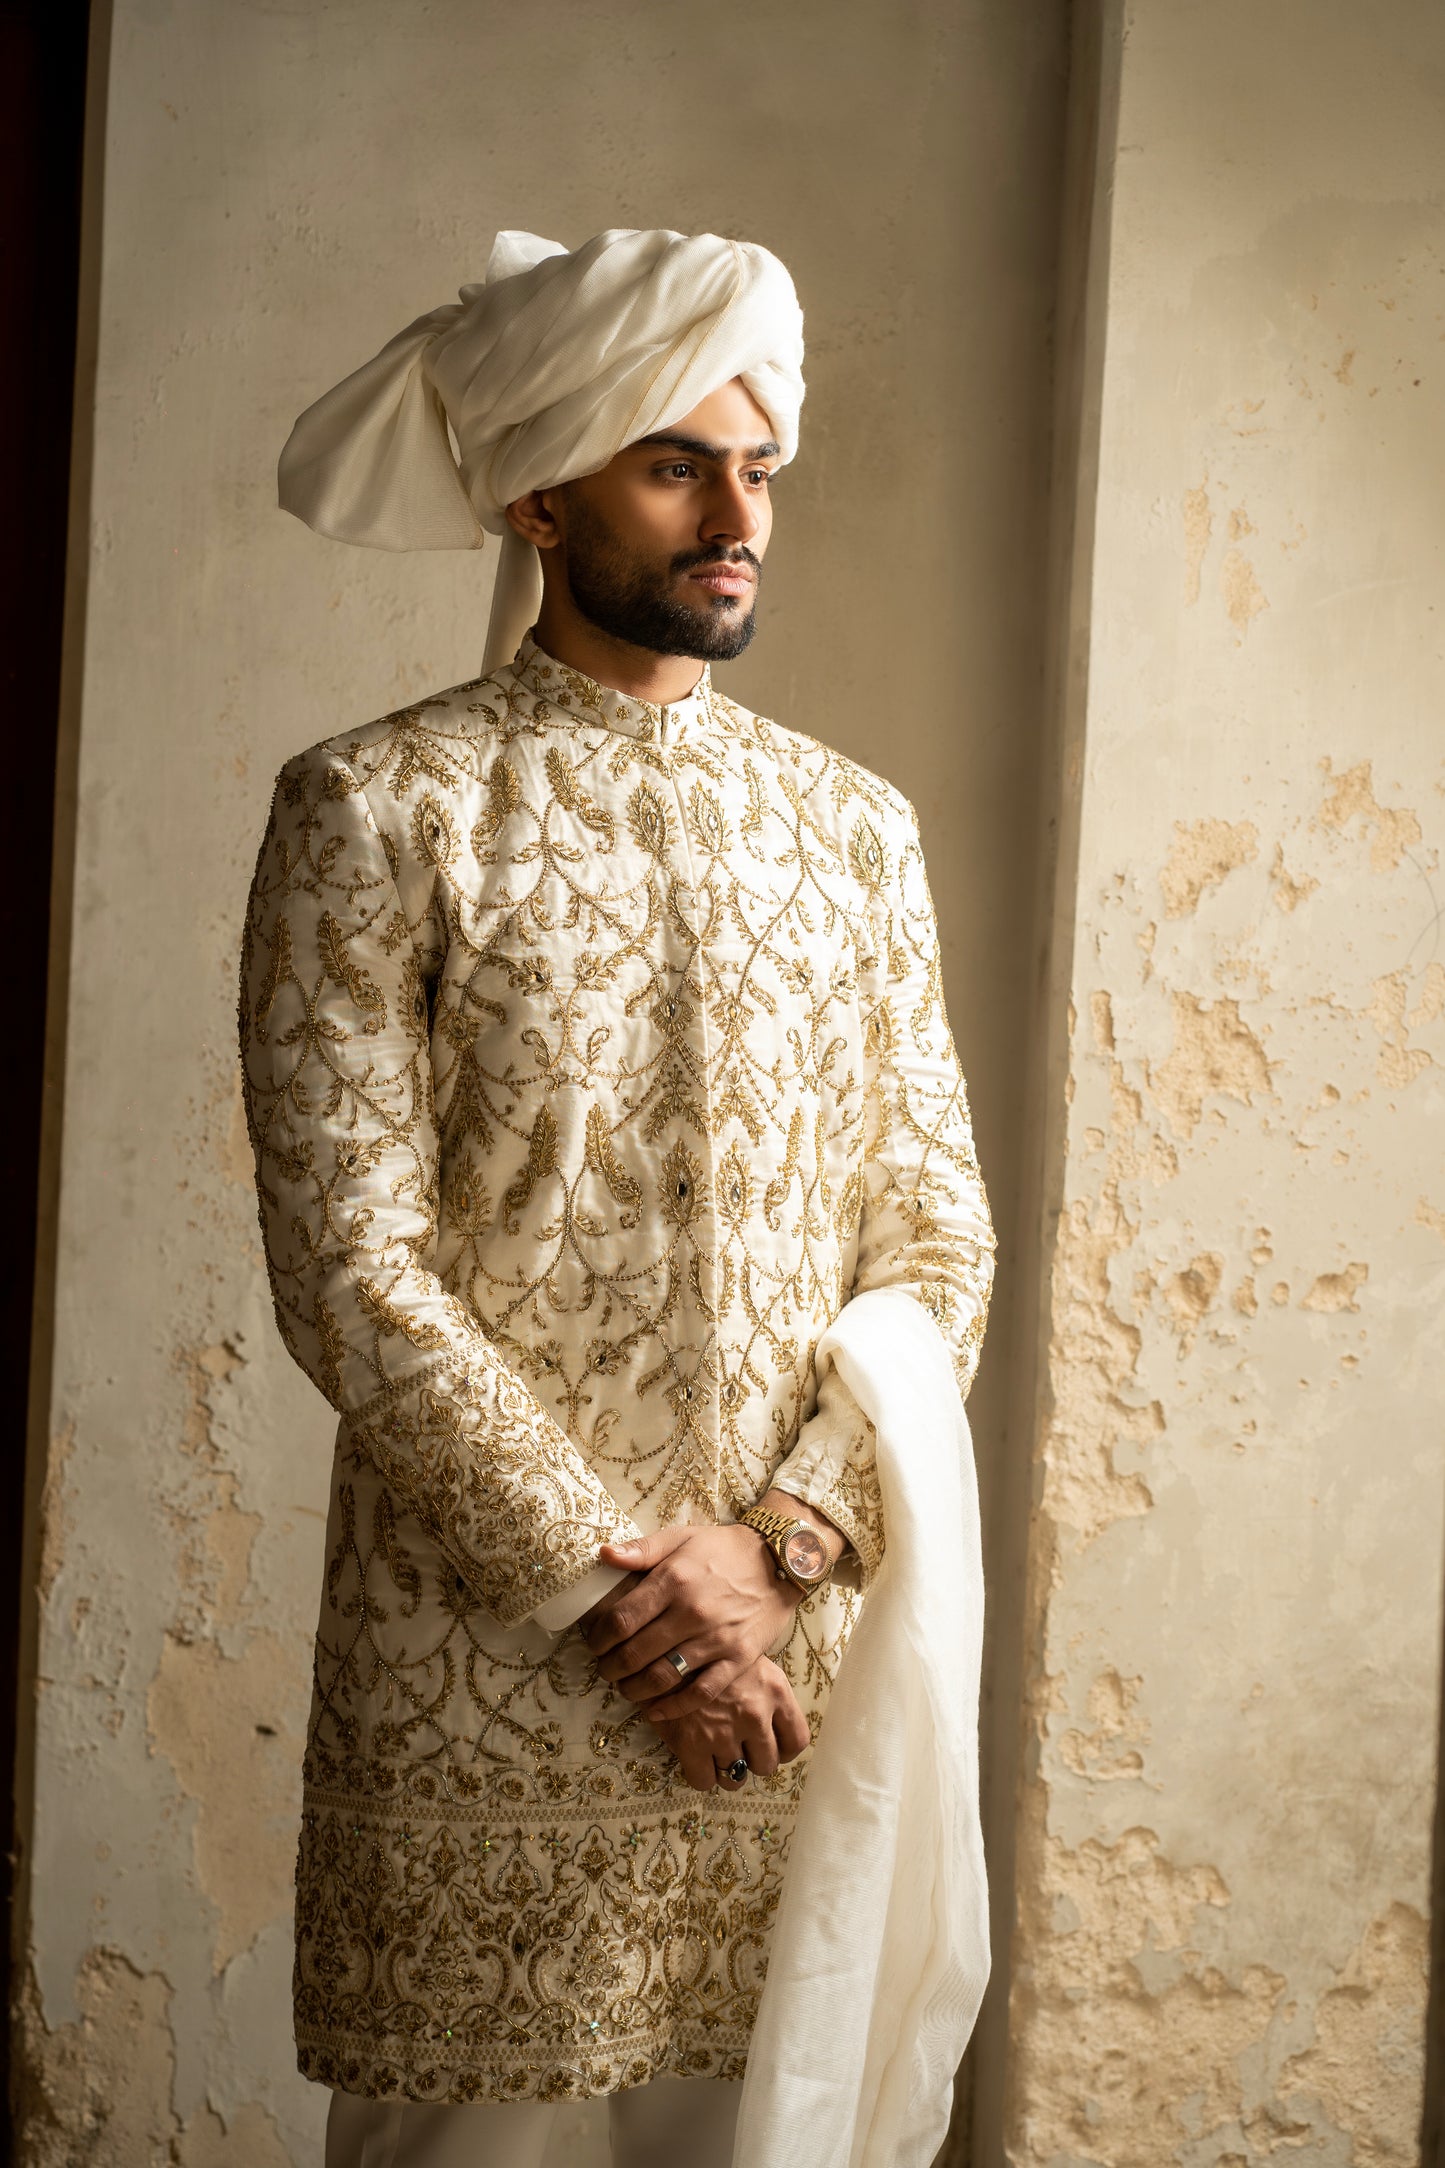 Exquisite Elegance: Handcrafted Sherwani by Snug